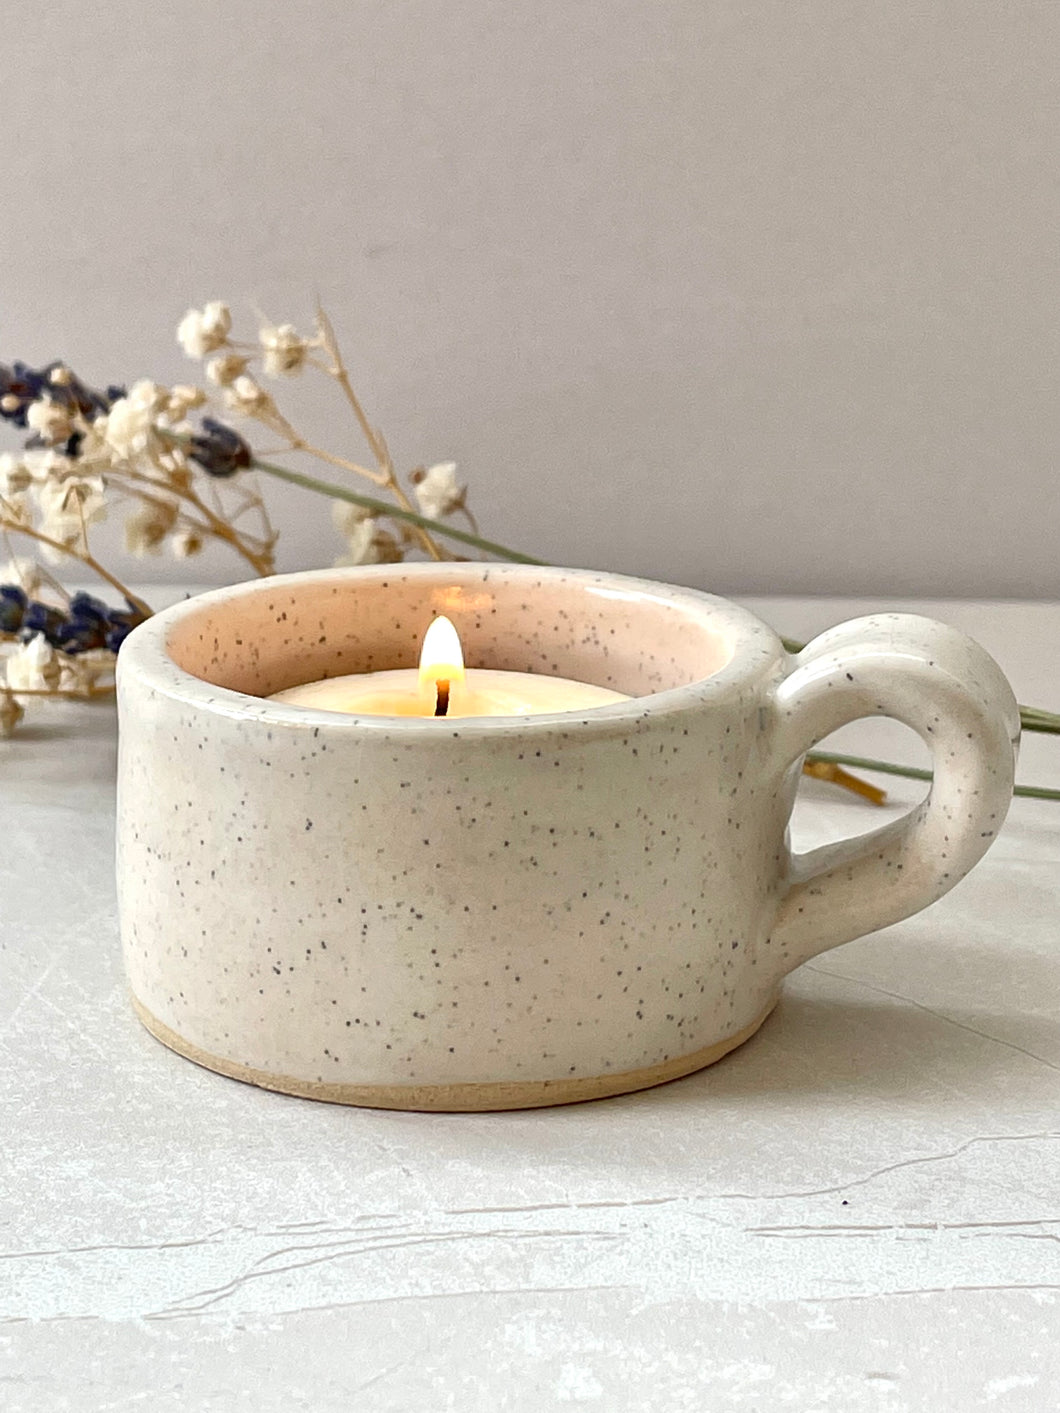 Handmade Ceramic Tea Light Holder